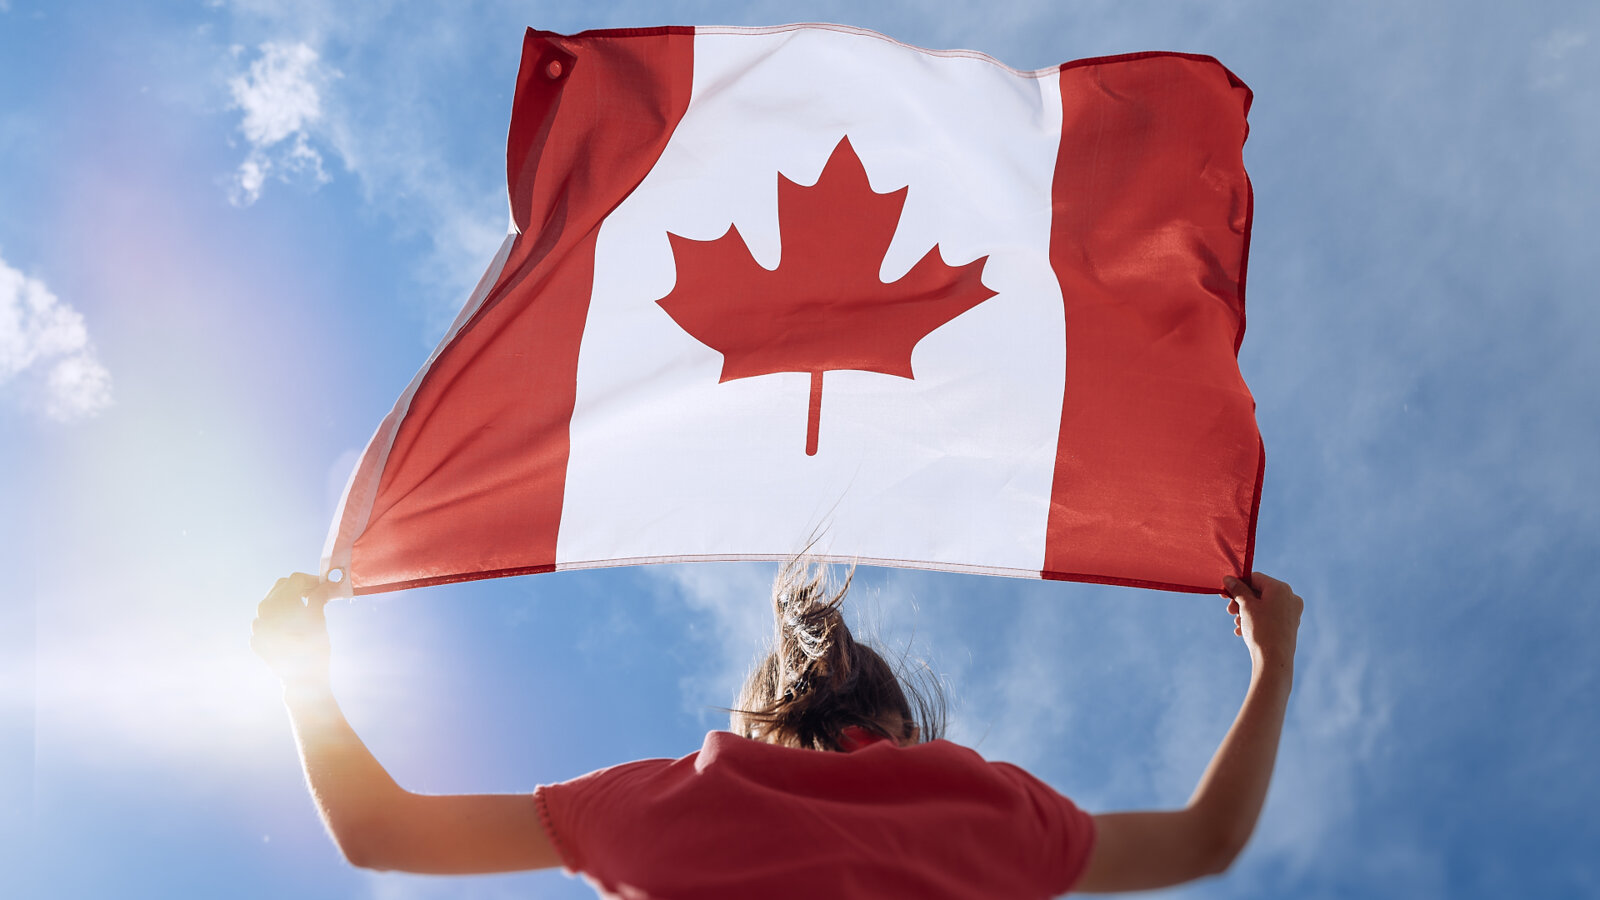 Stomatološke asistente i zubne tehničare Kanada dodala u program imigracije kvalifikovanih radnika